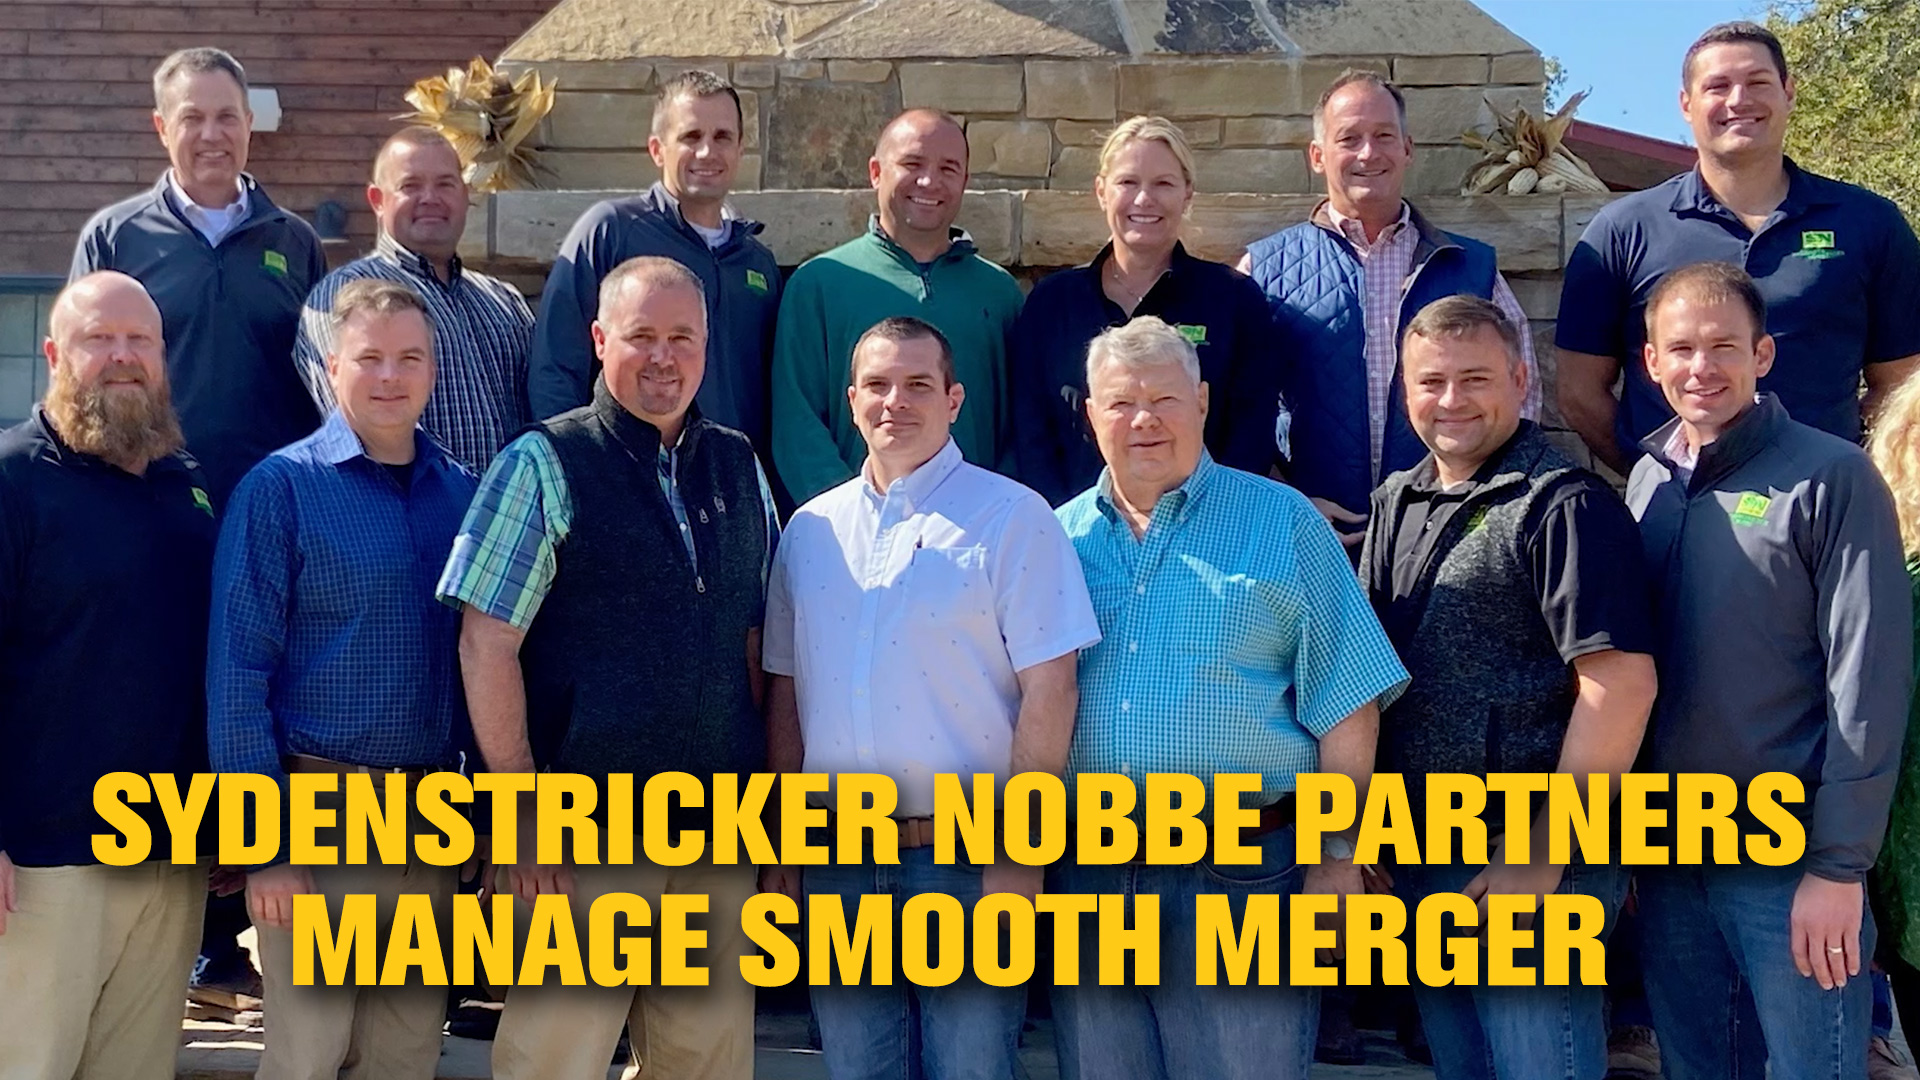 1-Sydenstricker-Nobbe-Partners-Manage-Smooth-Merger.jpg